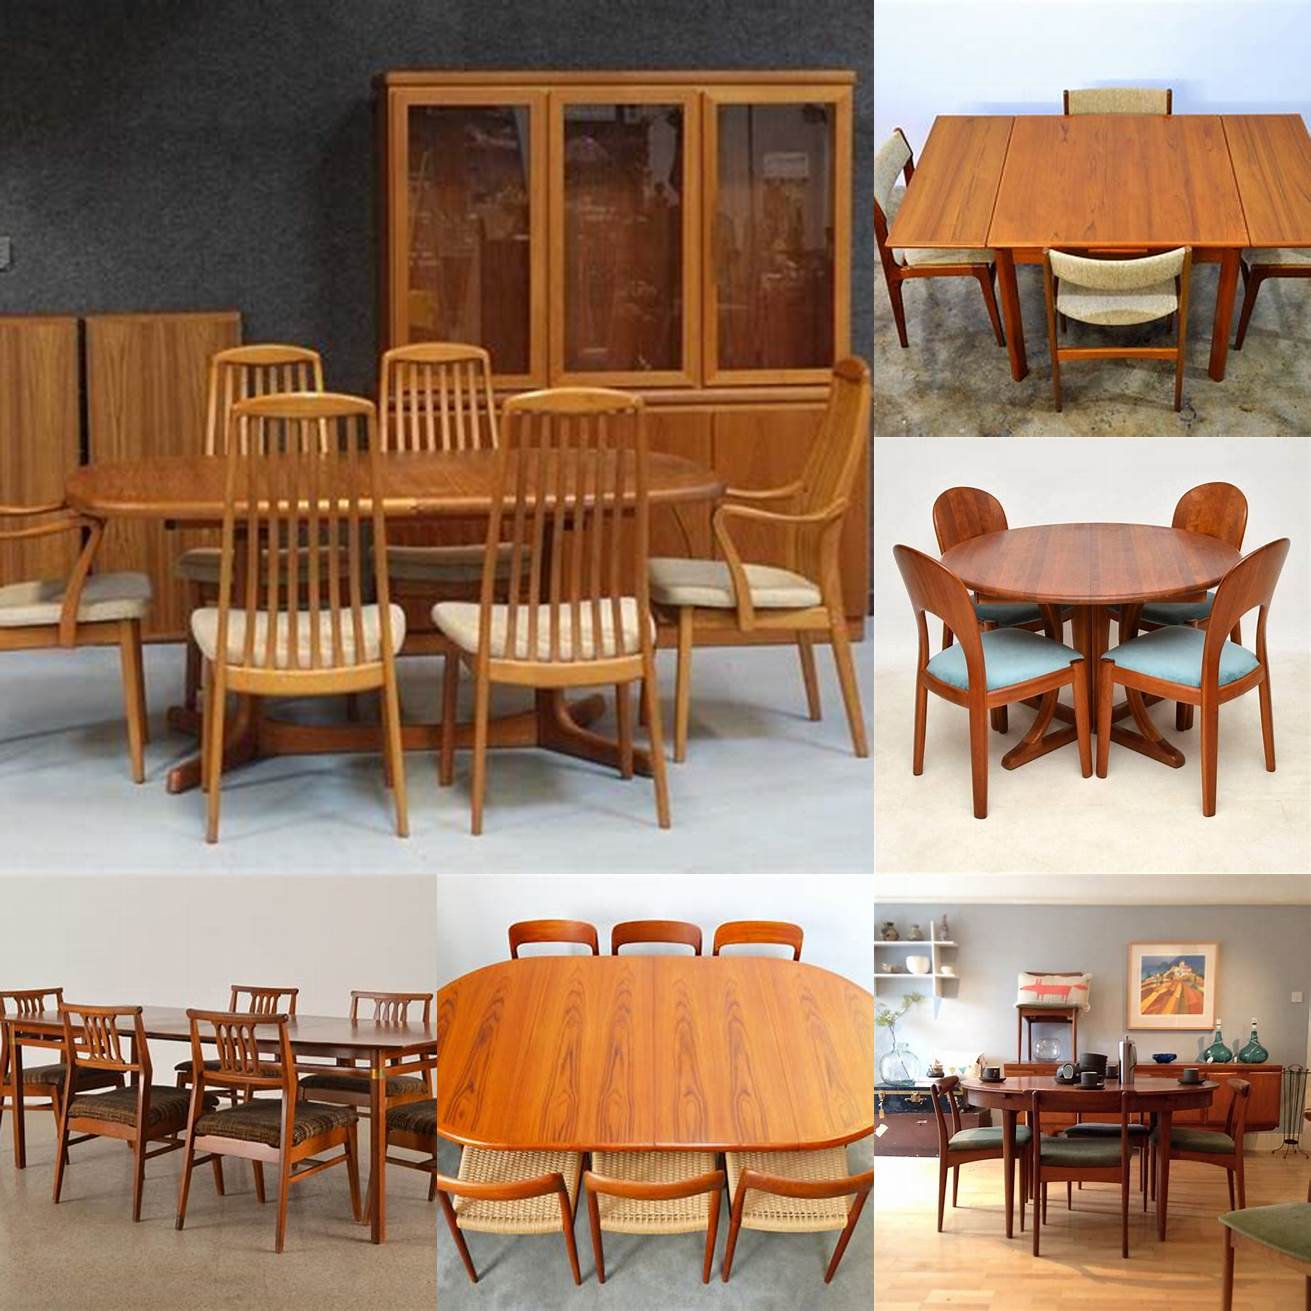 Teak furniture in a dining room